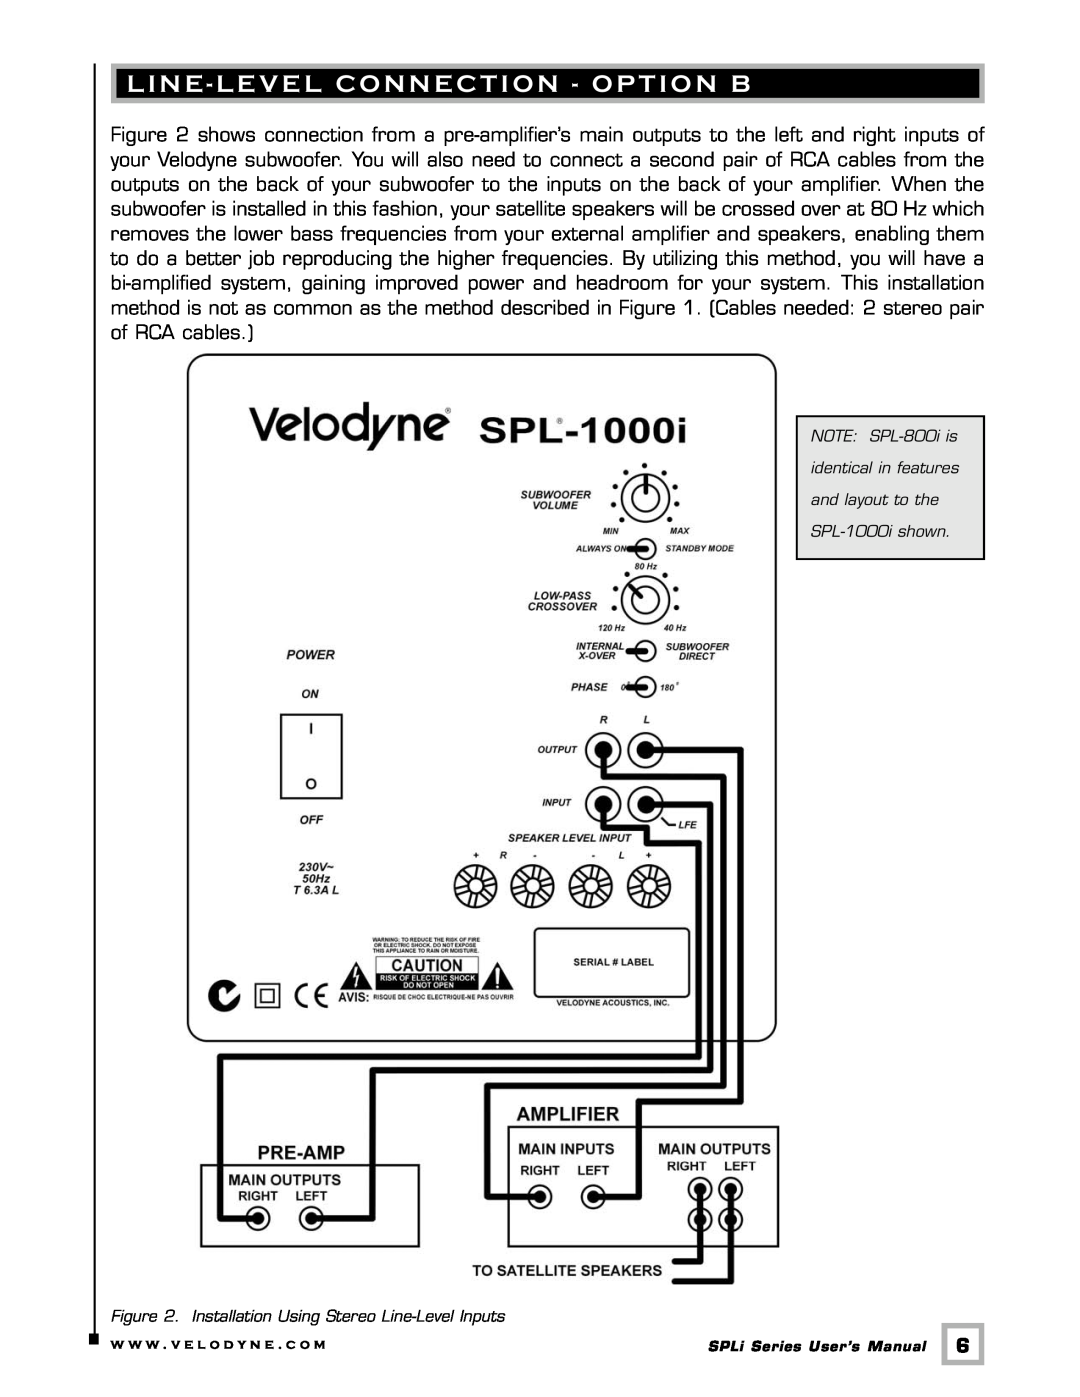 Velodyne Acoustics SPL-1000I user manual Line - Level Connection - Option B 